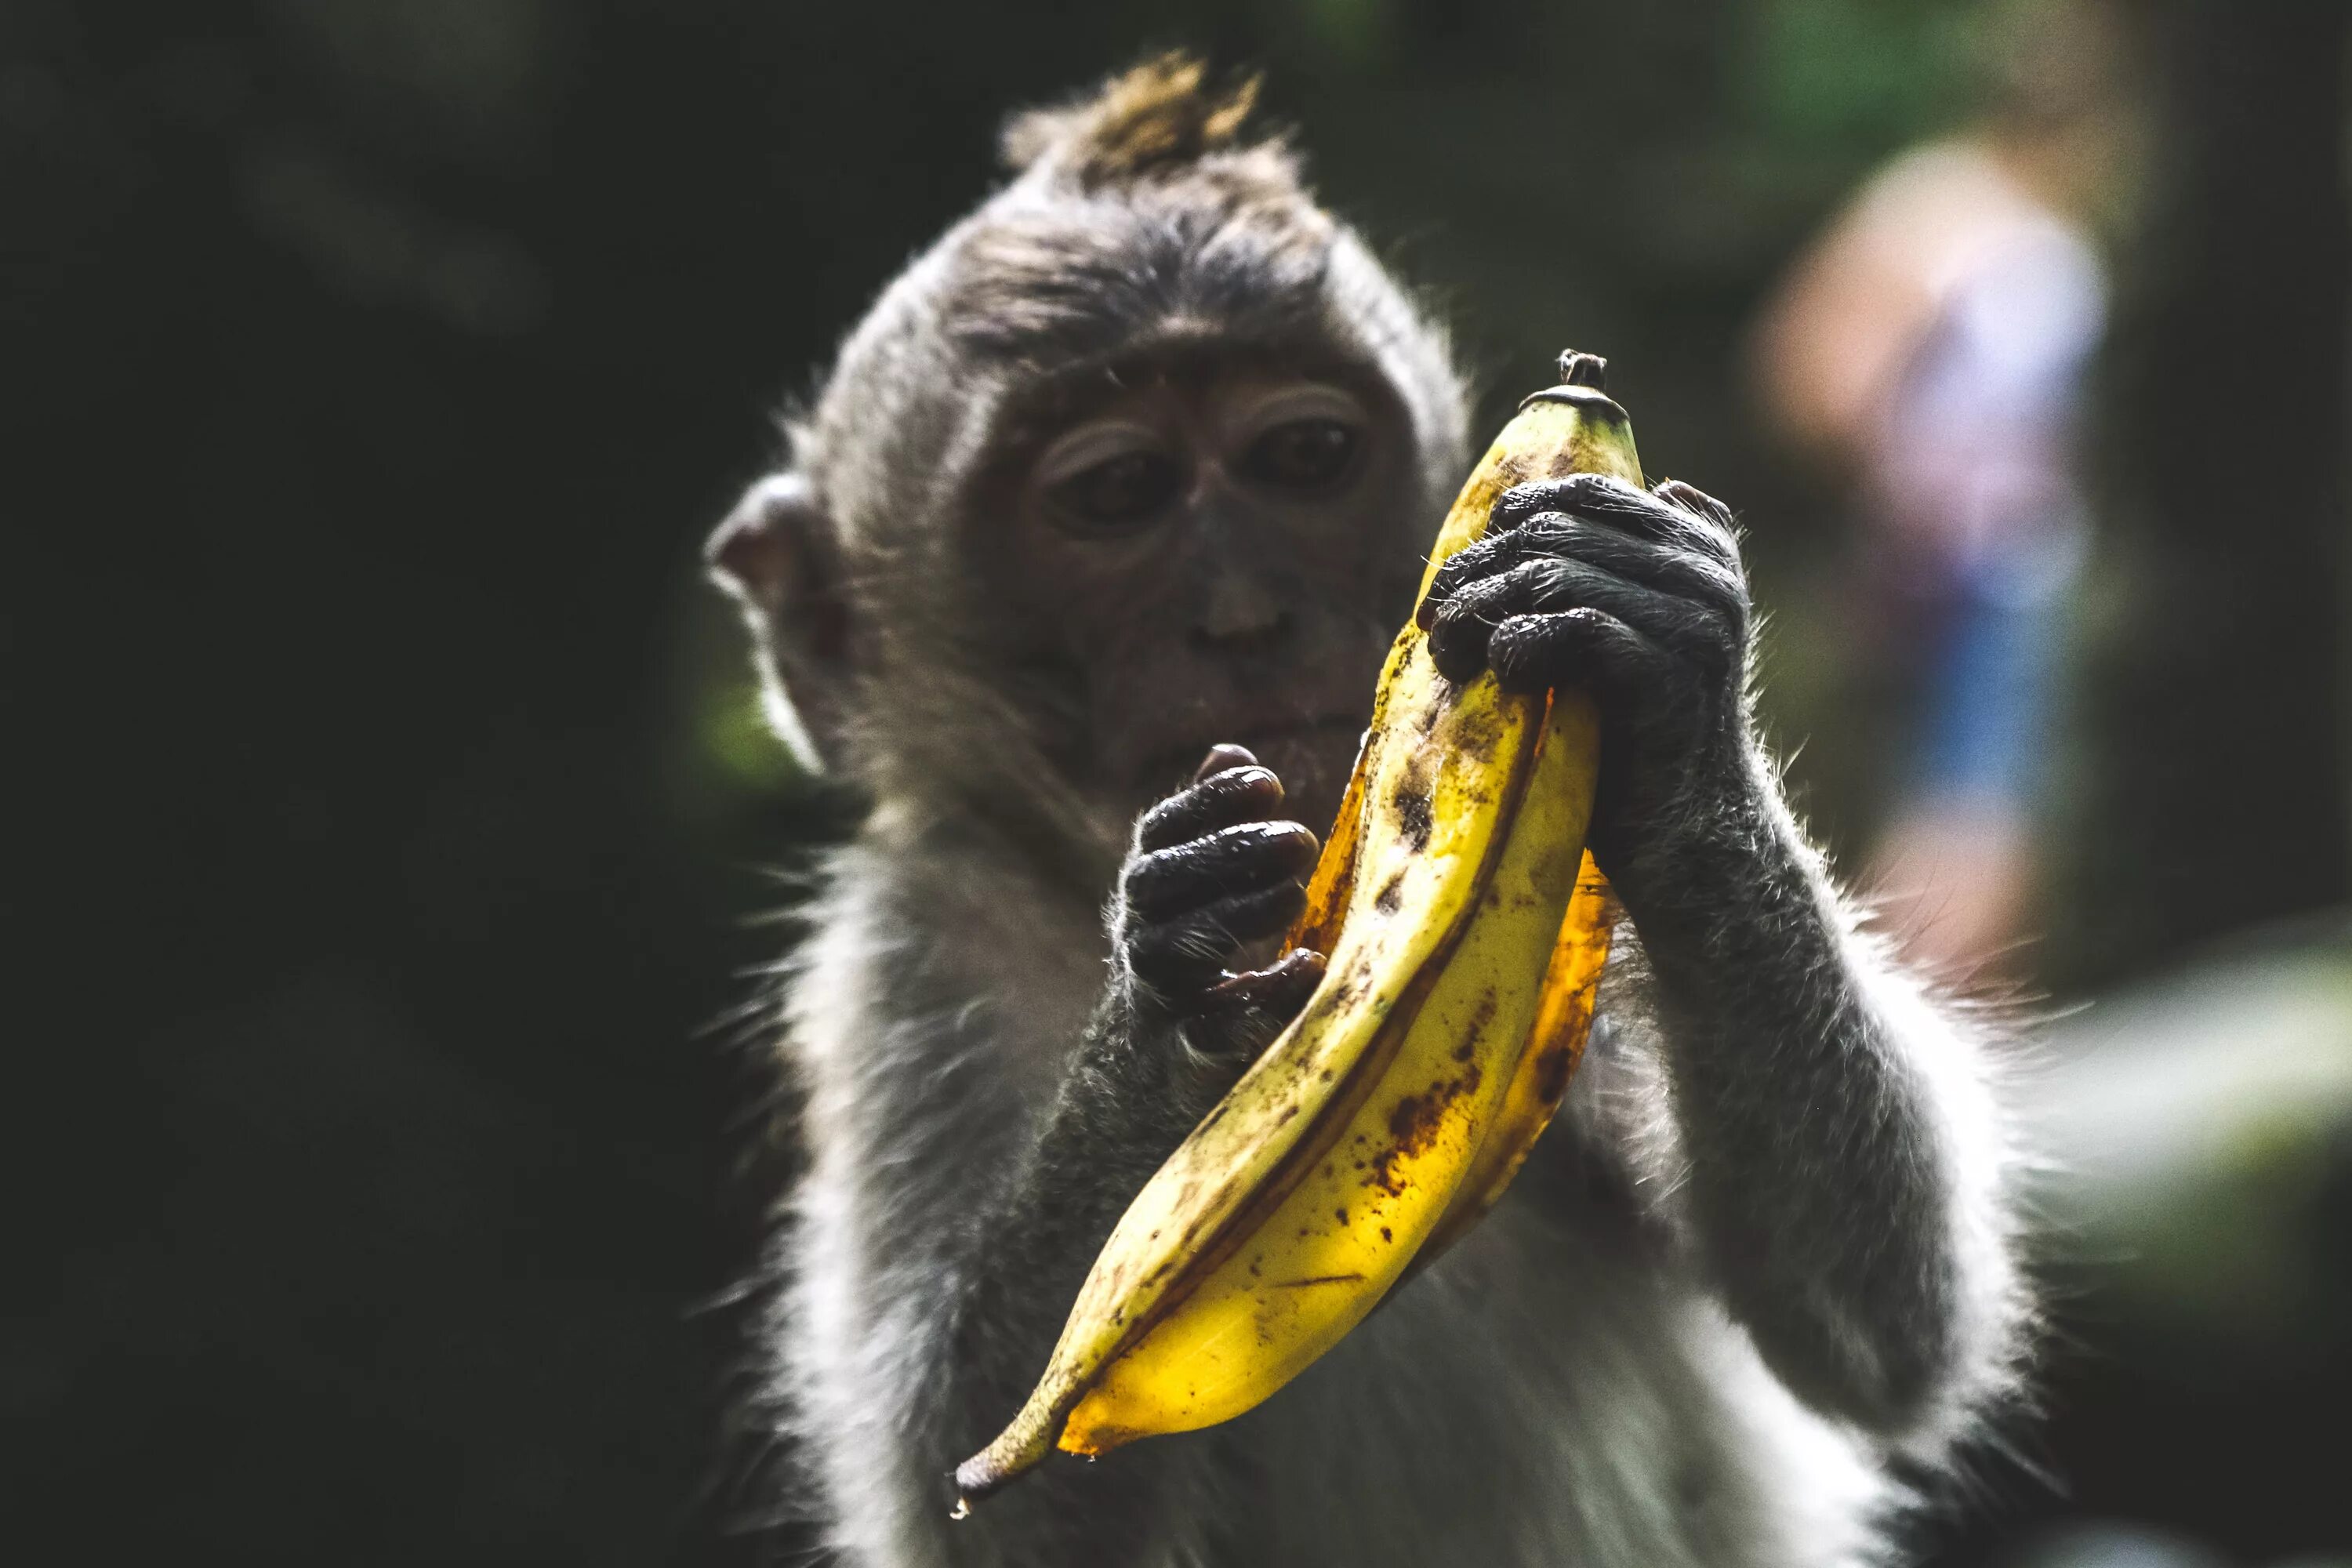 Обезьяна с бананом. Бибизьяна с бонаном. Obezyano s bansnom. Шимпанзе с бананом. Обезьяны любят бананы